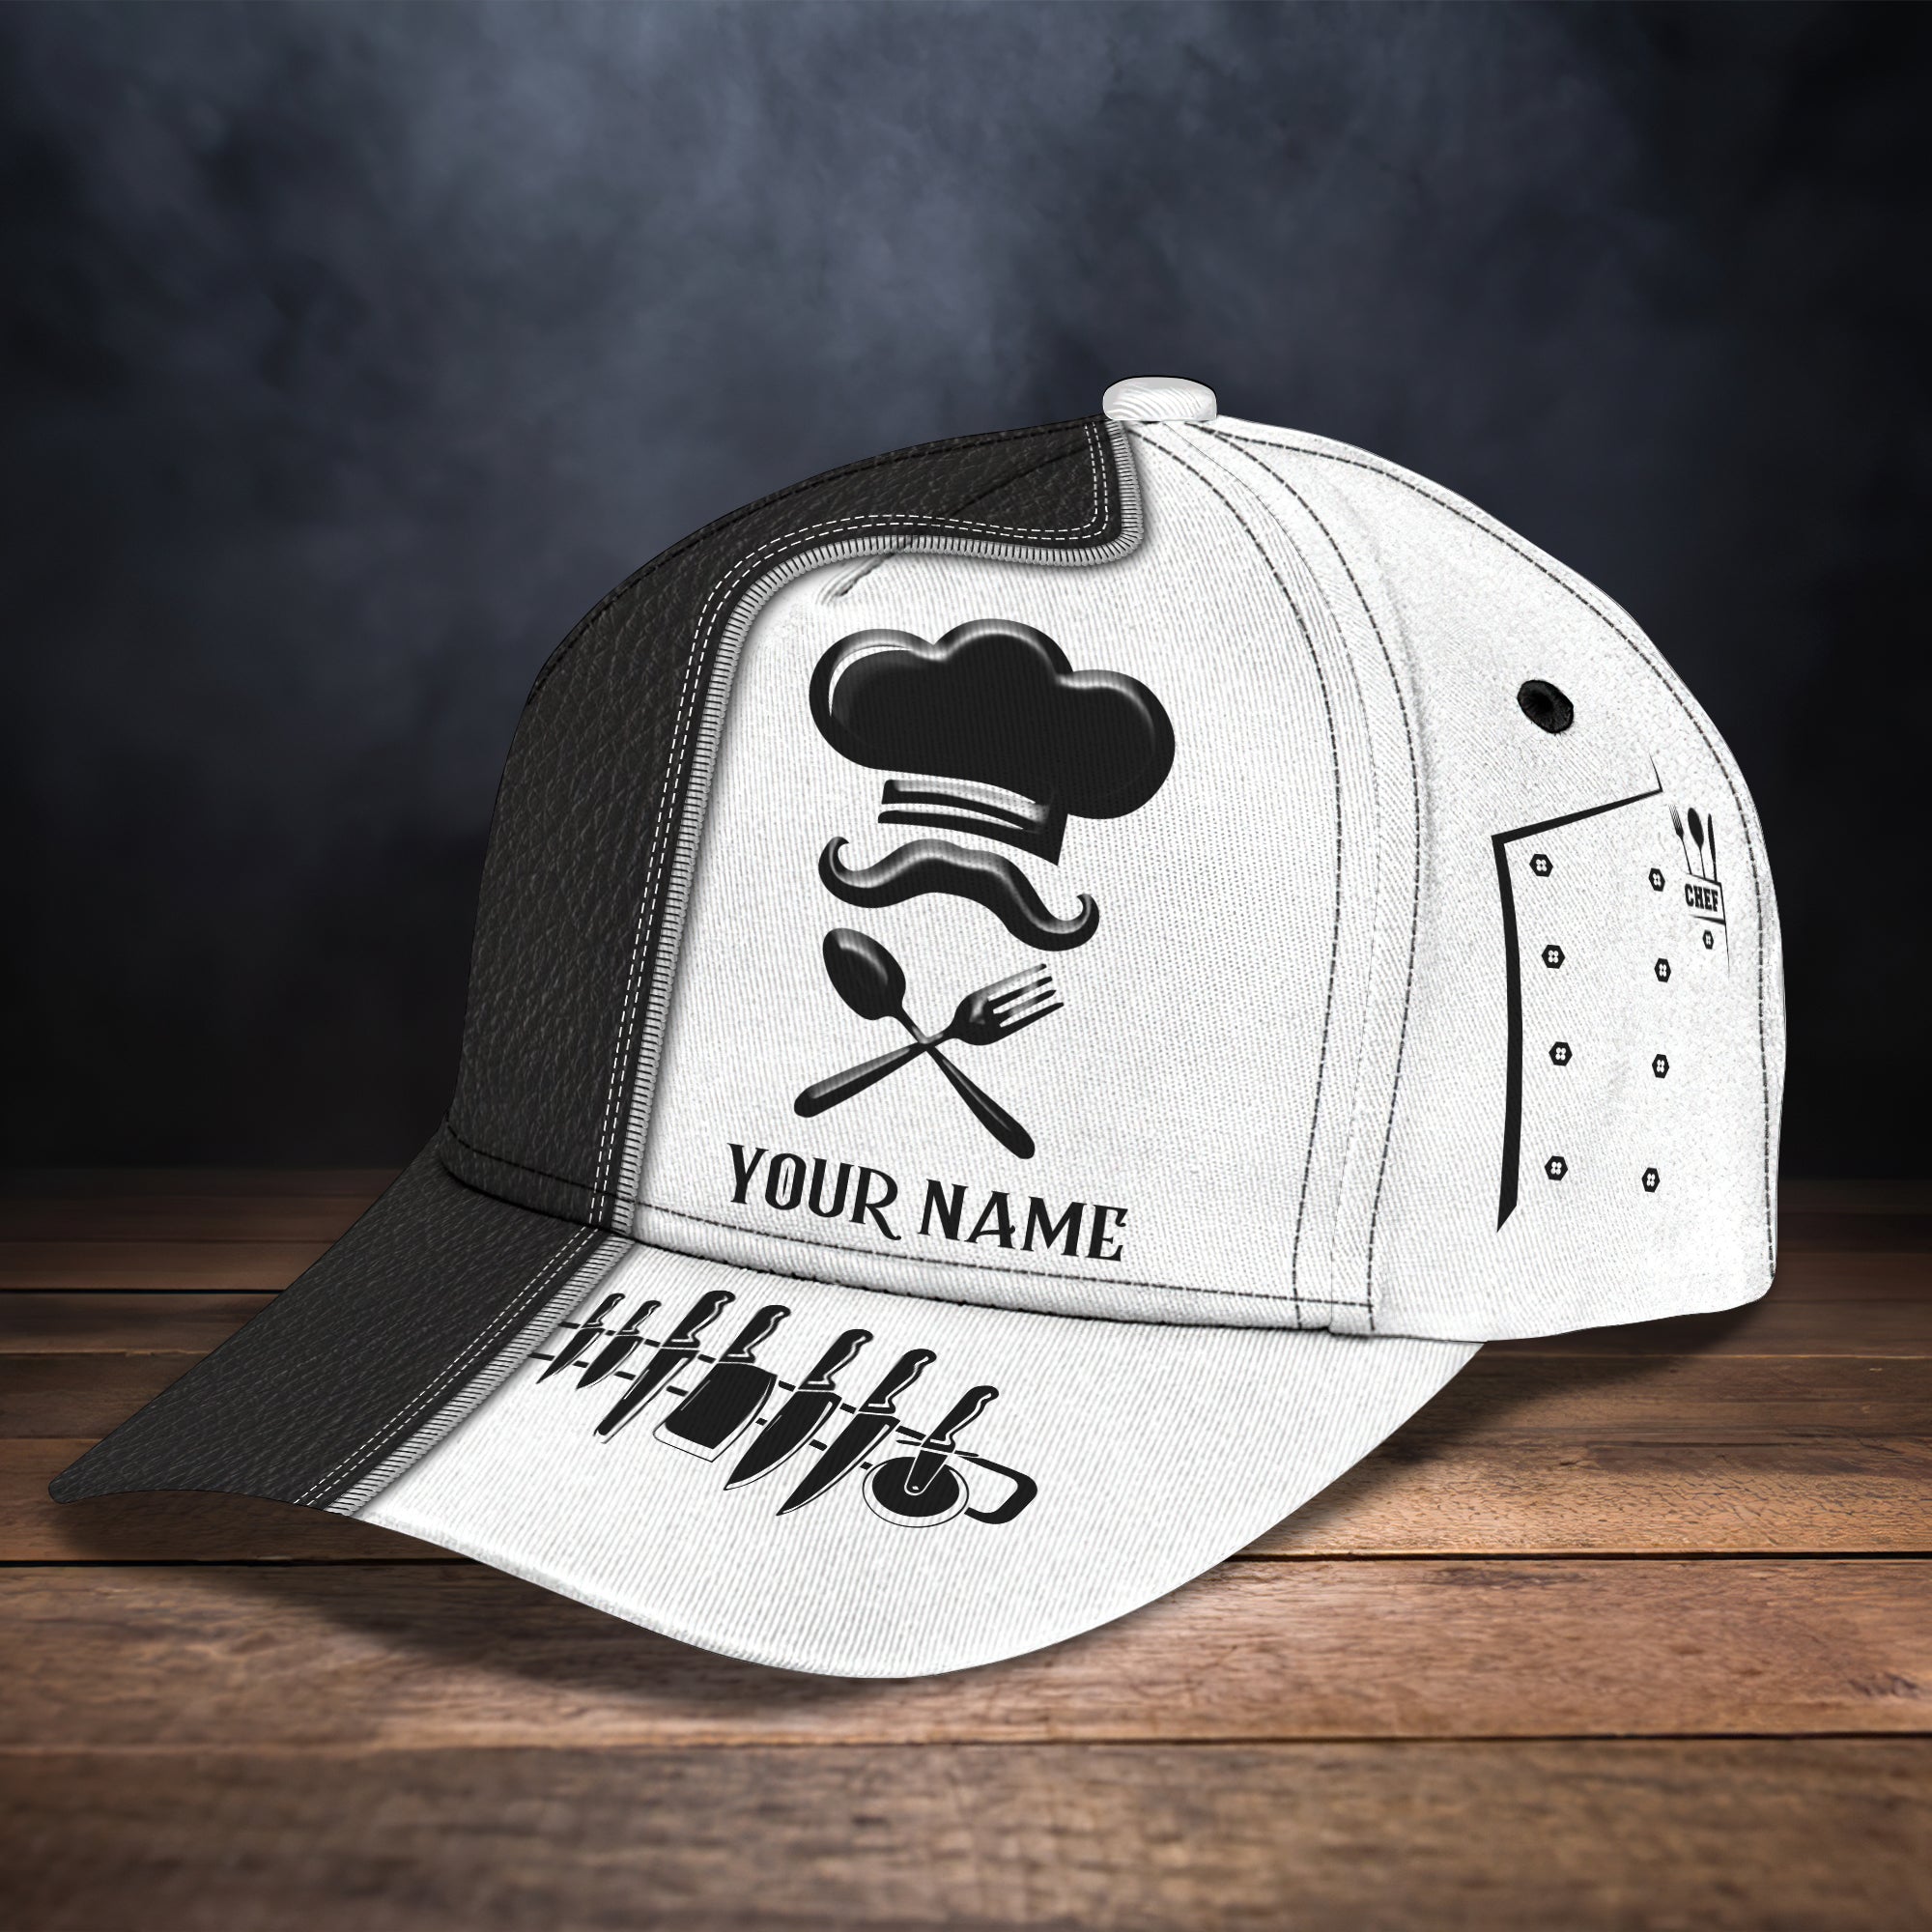 Personalized White Black 3D Chef Cap/ Master Chef Cap Hat/ Baseball Cap/ Classic Cap For Master Chef